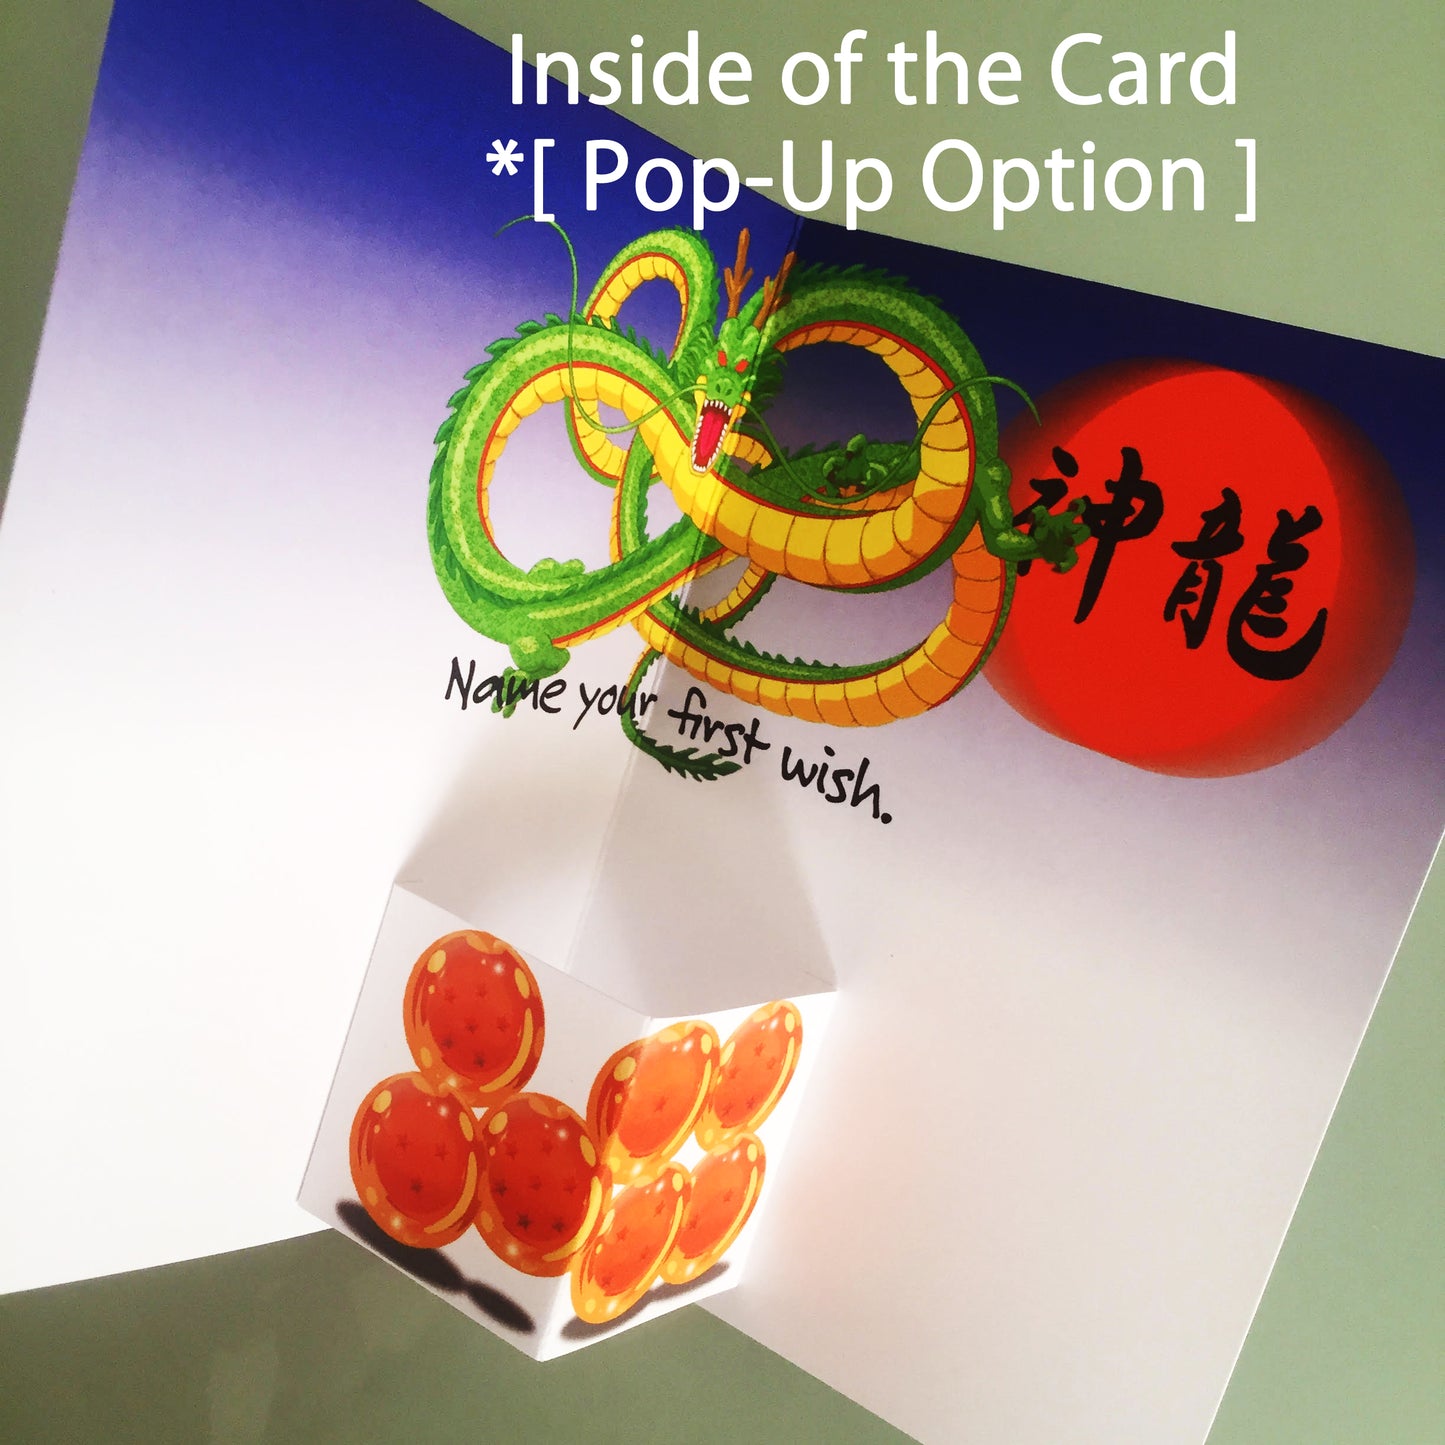 Dragon Ball Z Birthday Card - Scouter